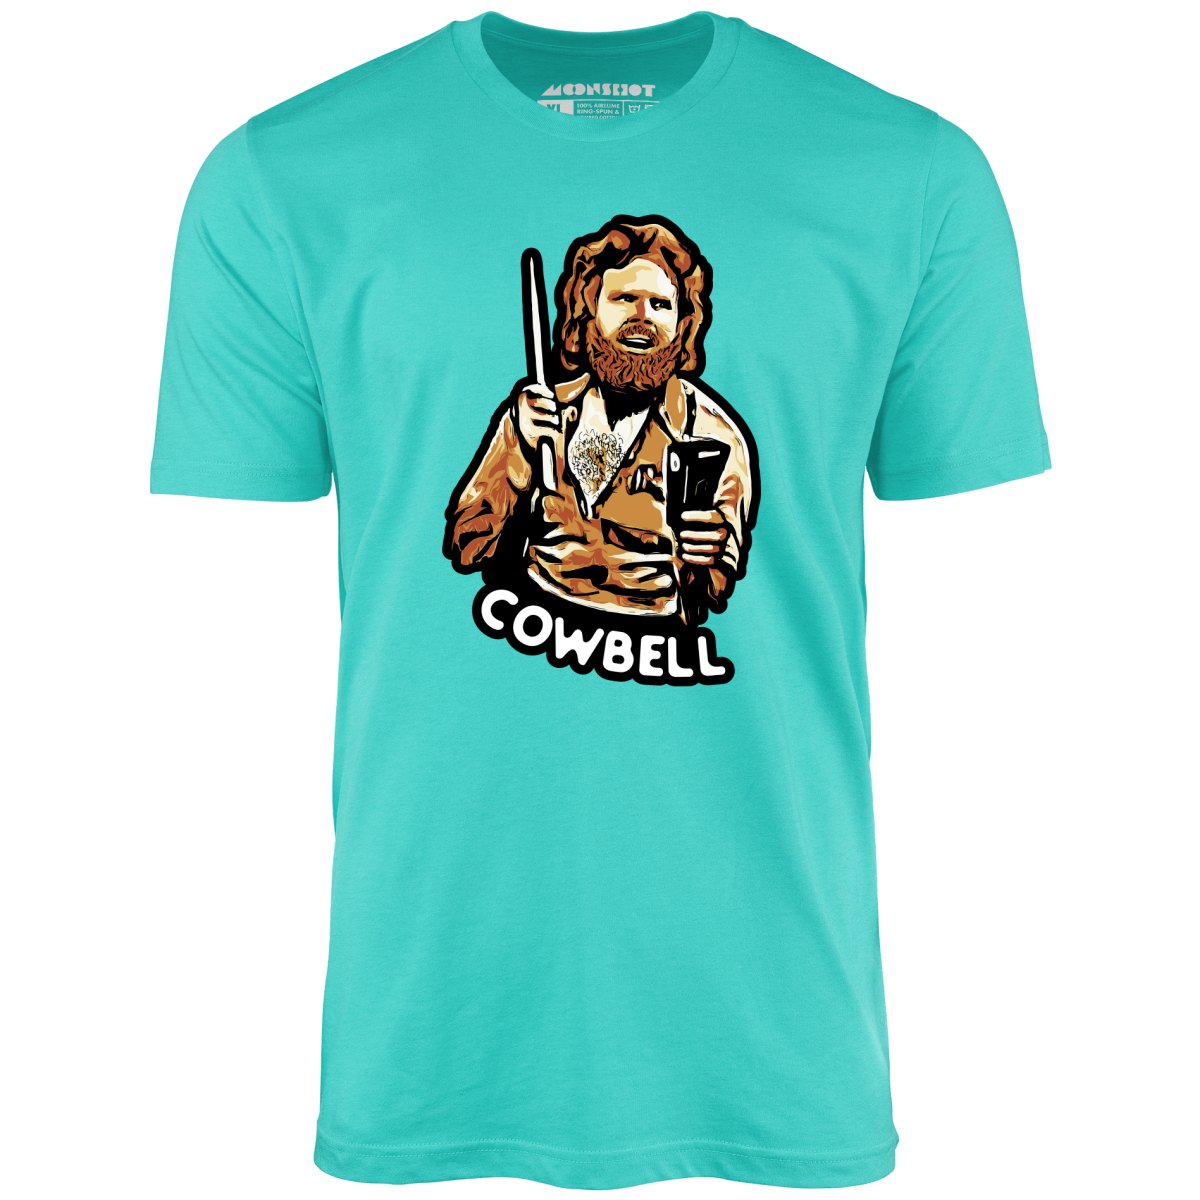 More Cowbell - Unisex T-Shirt